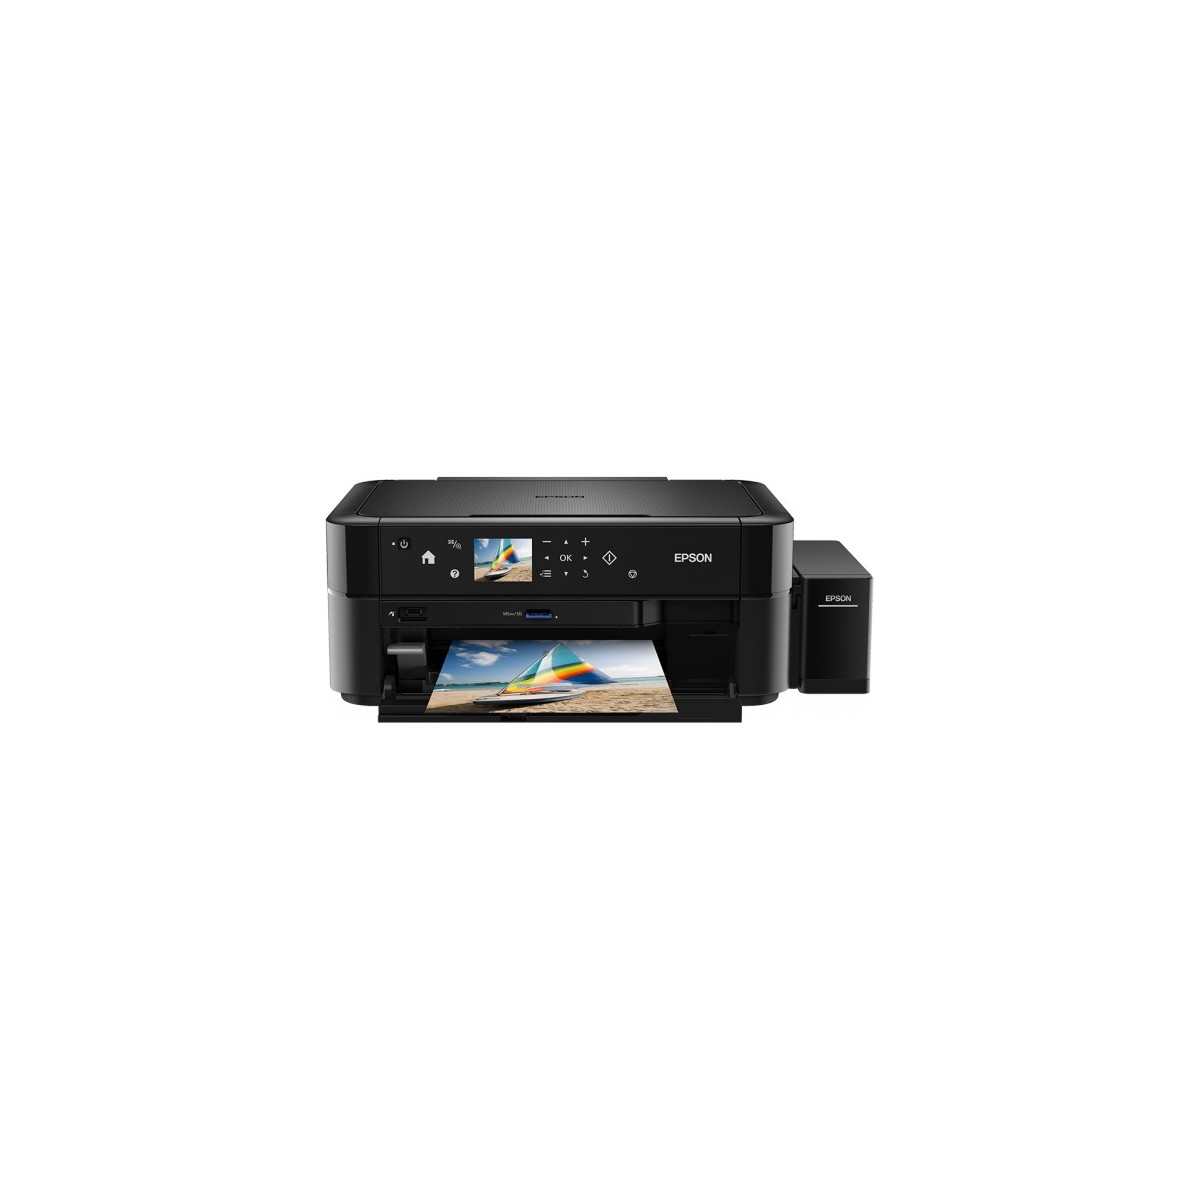 Epson L850 - Inkjet - Colour printing - 5760 x 1440 DPI - Colour copying - A4 - Black